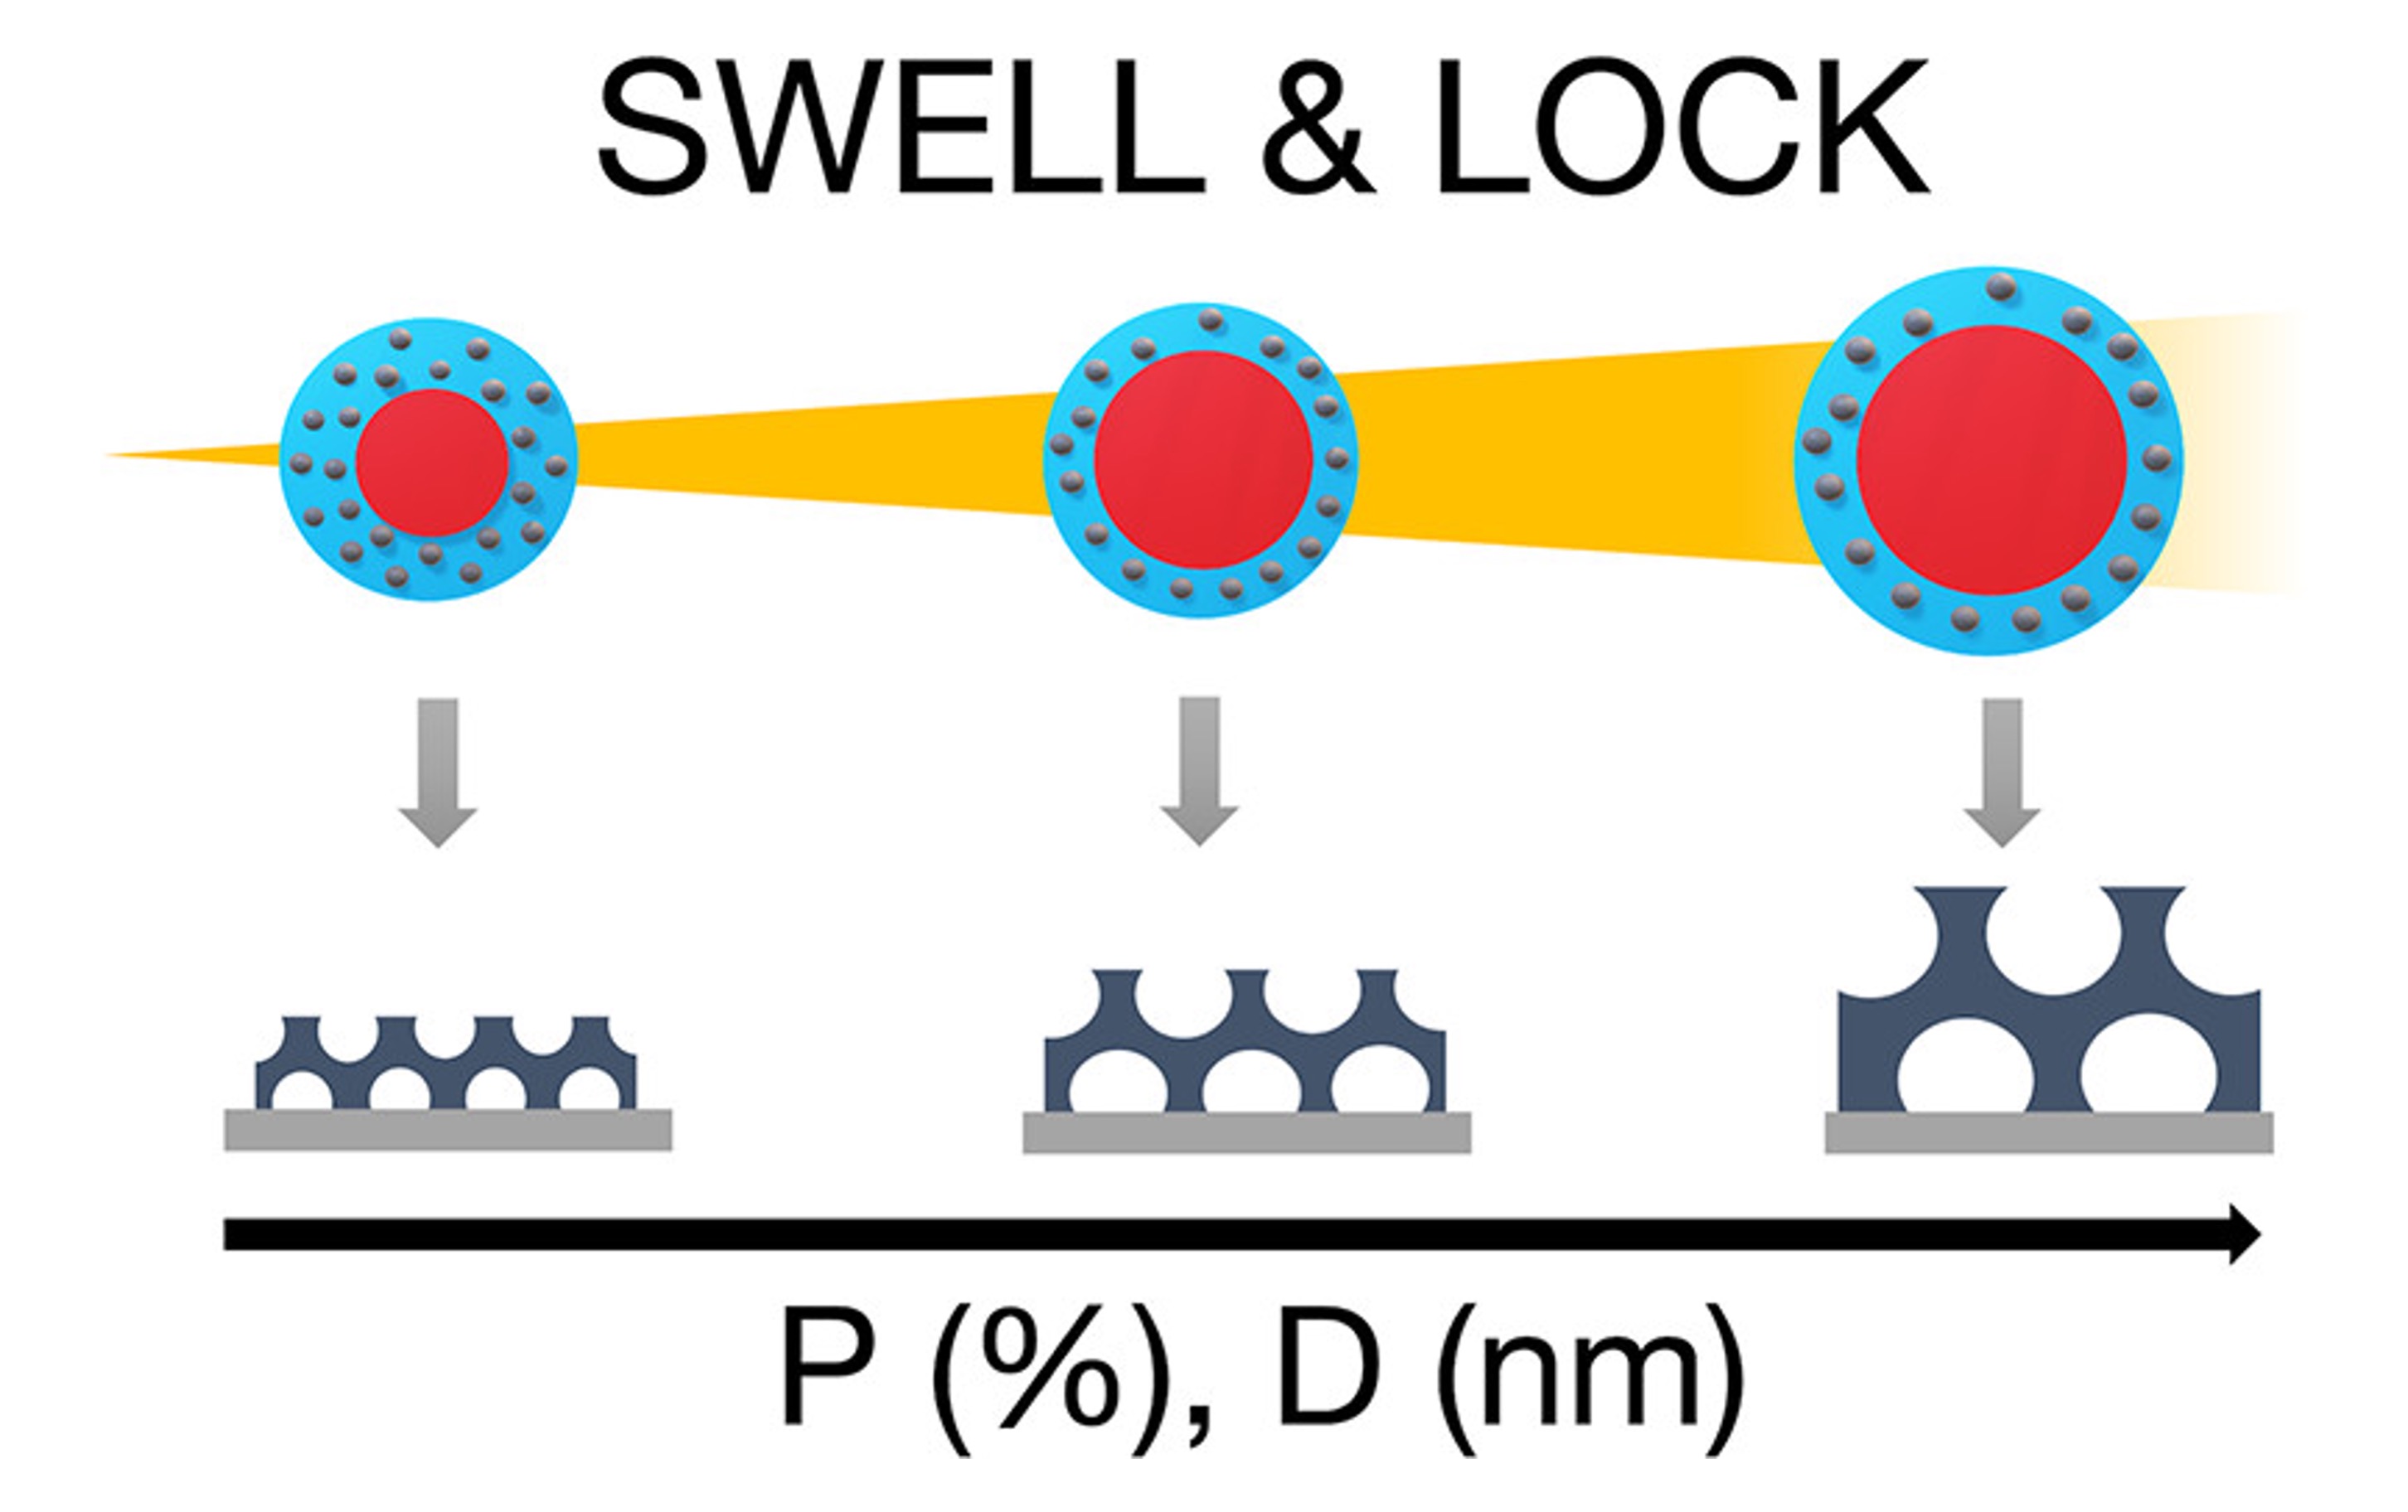 Schematic of Swell & Lock mechanism